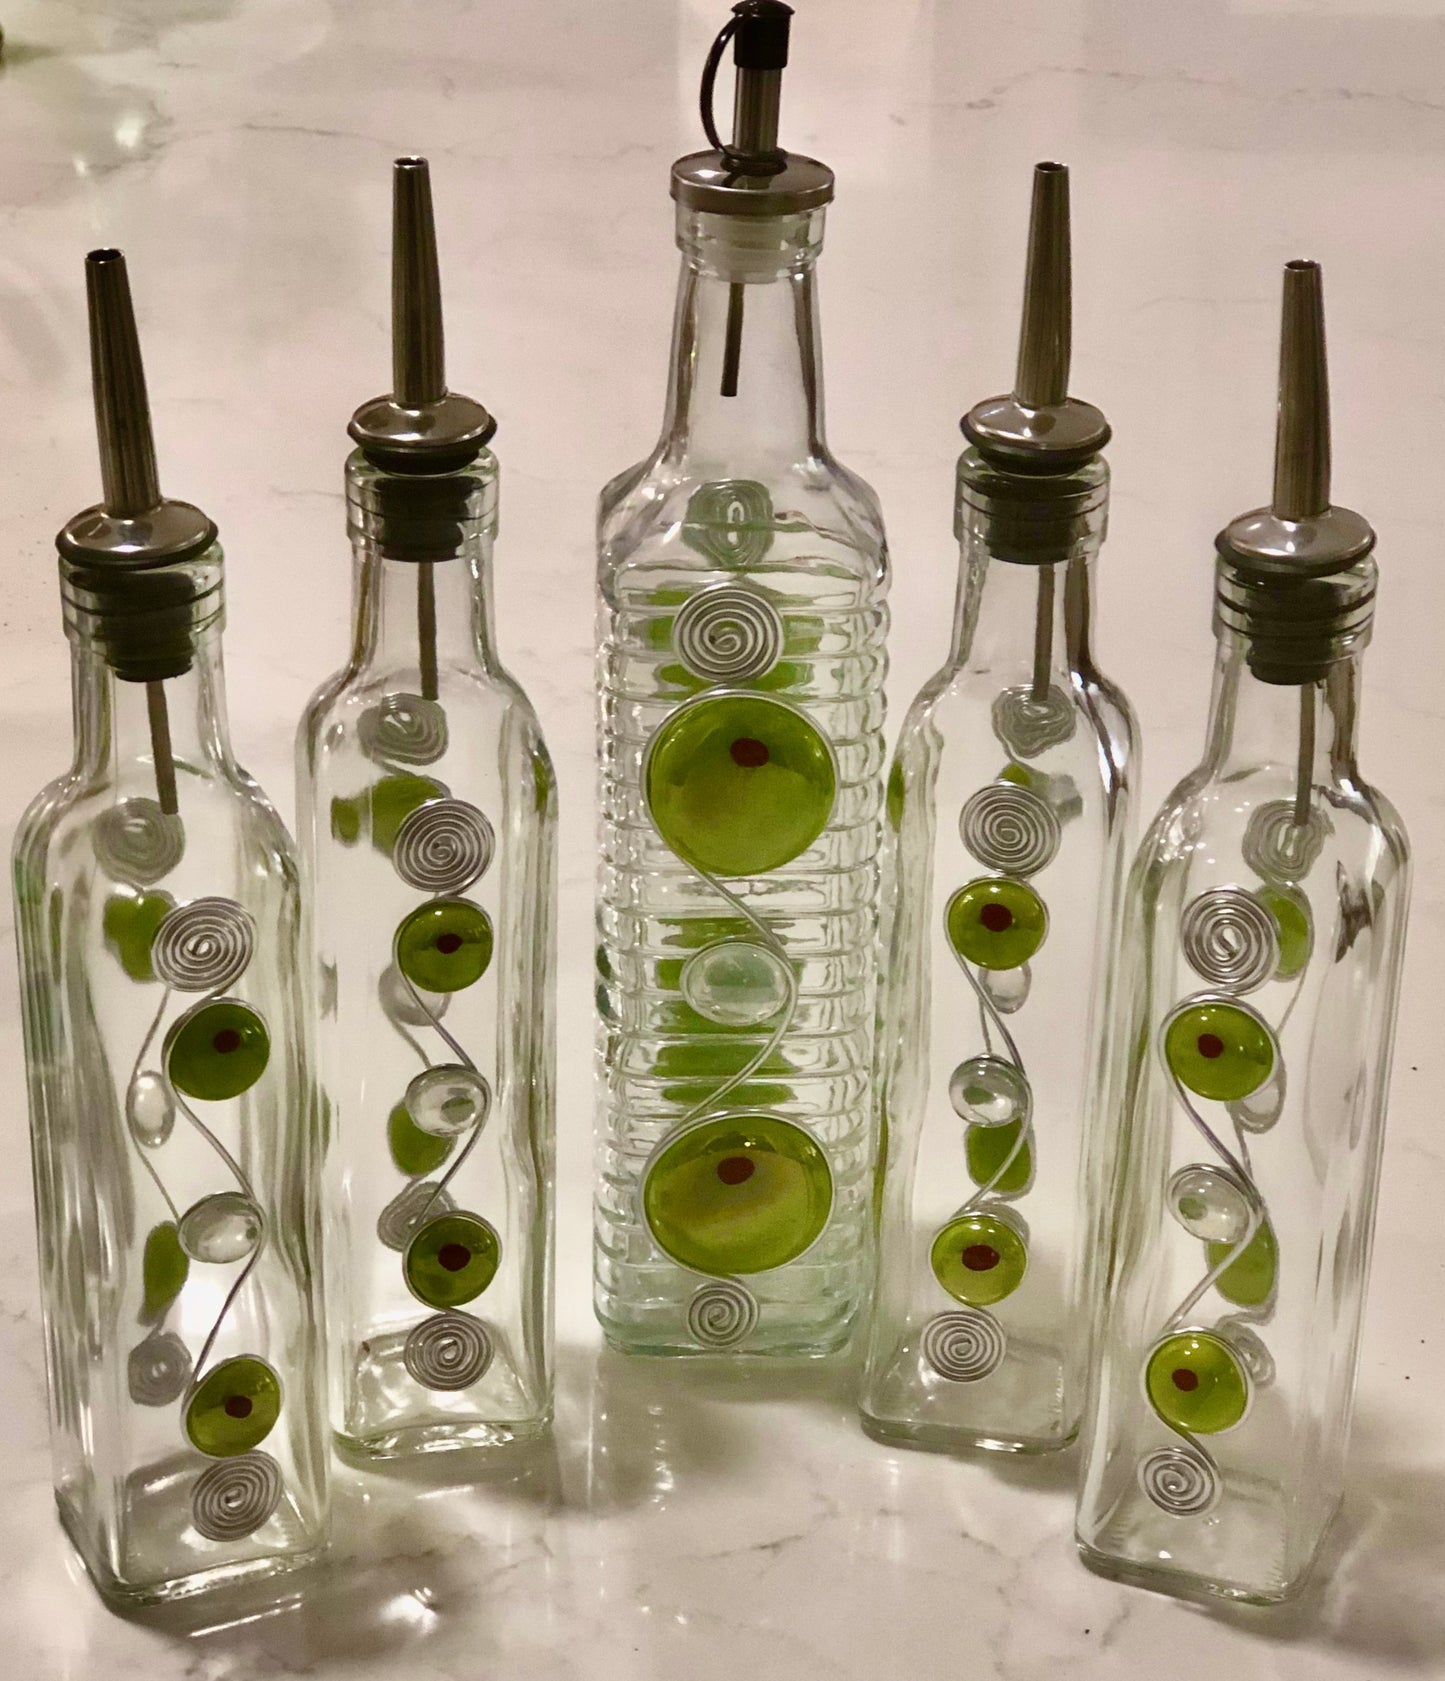 Olive Oil Bottles, 8 oz. and 16 oz. sizes